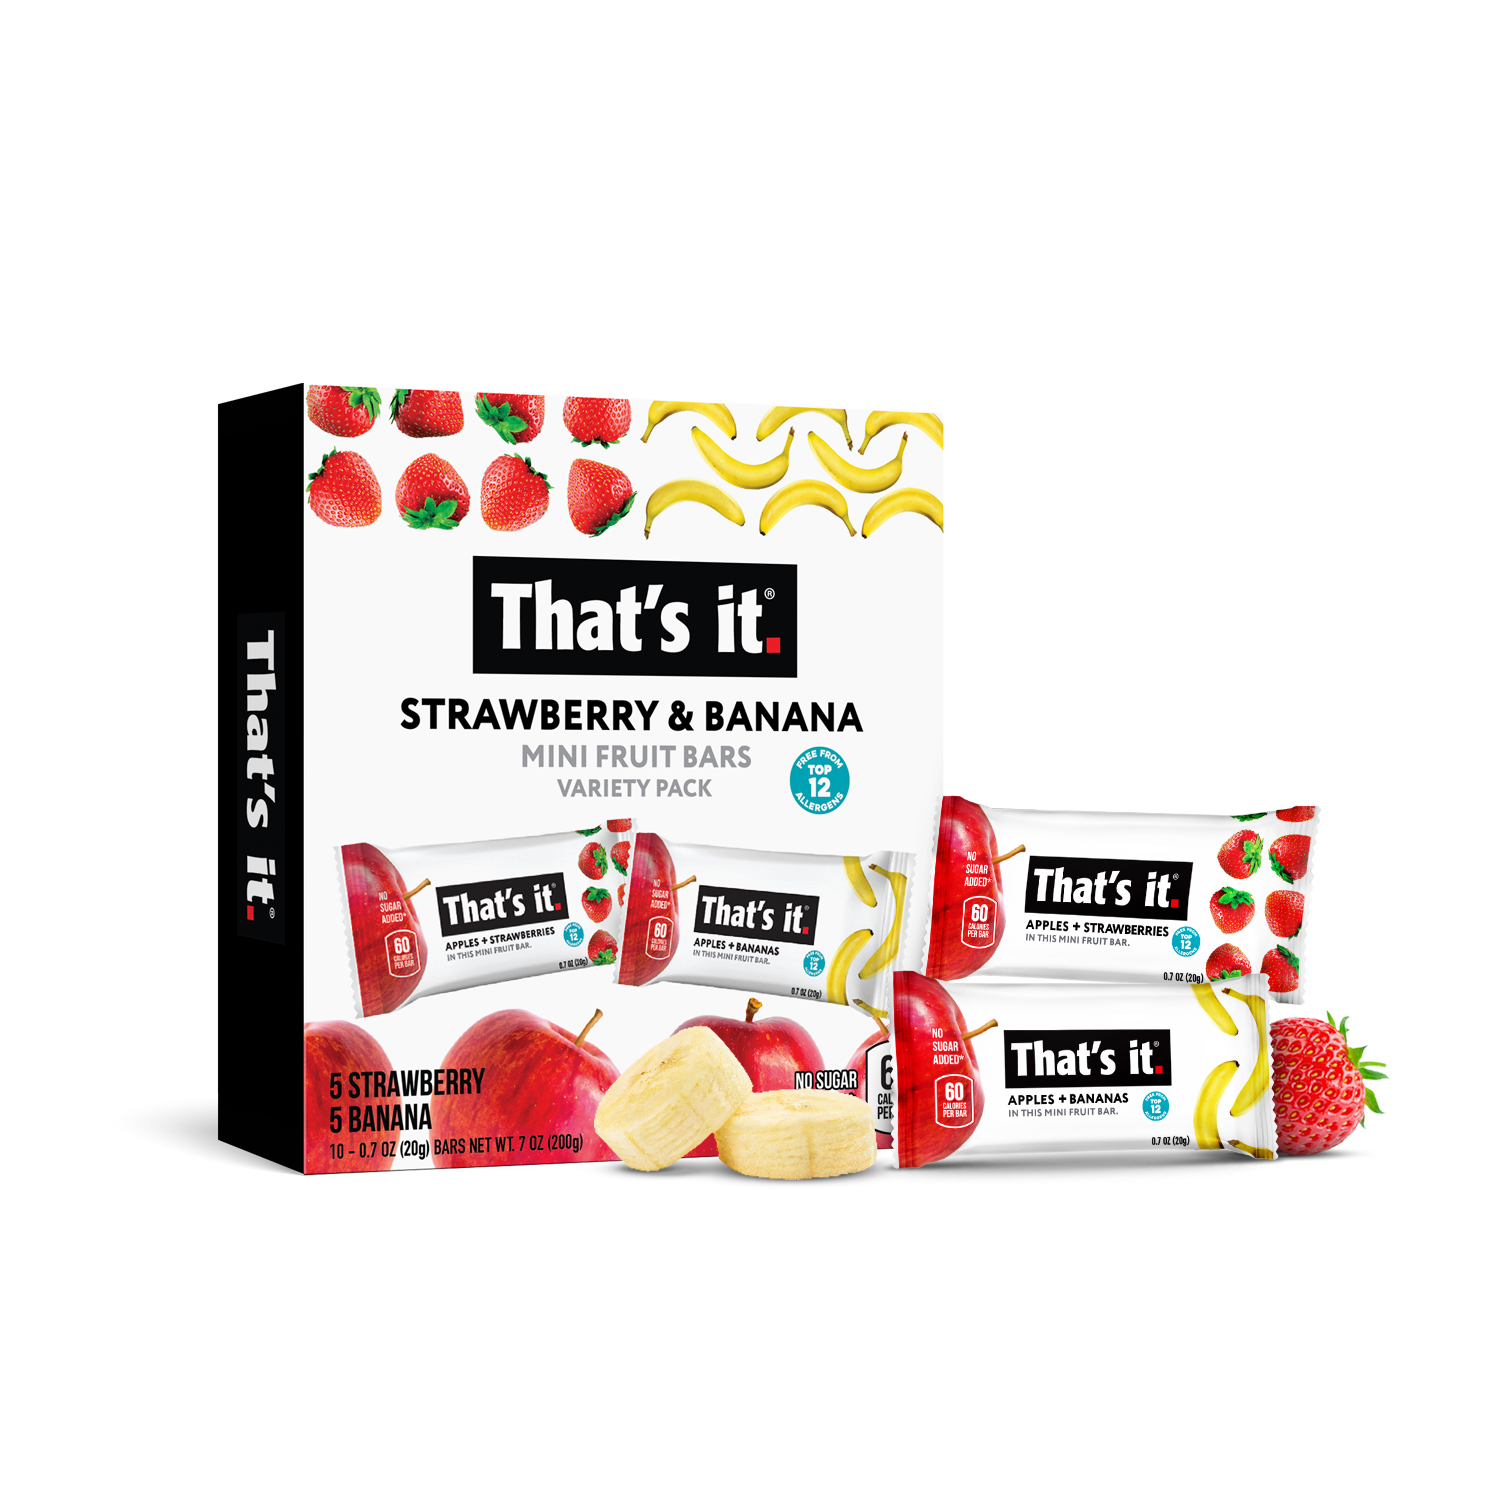 That's It Strawberry & Banana Mini Fruit Bars Variety Pack 6 innerpacks per case 7.0 oz